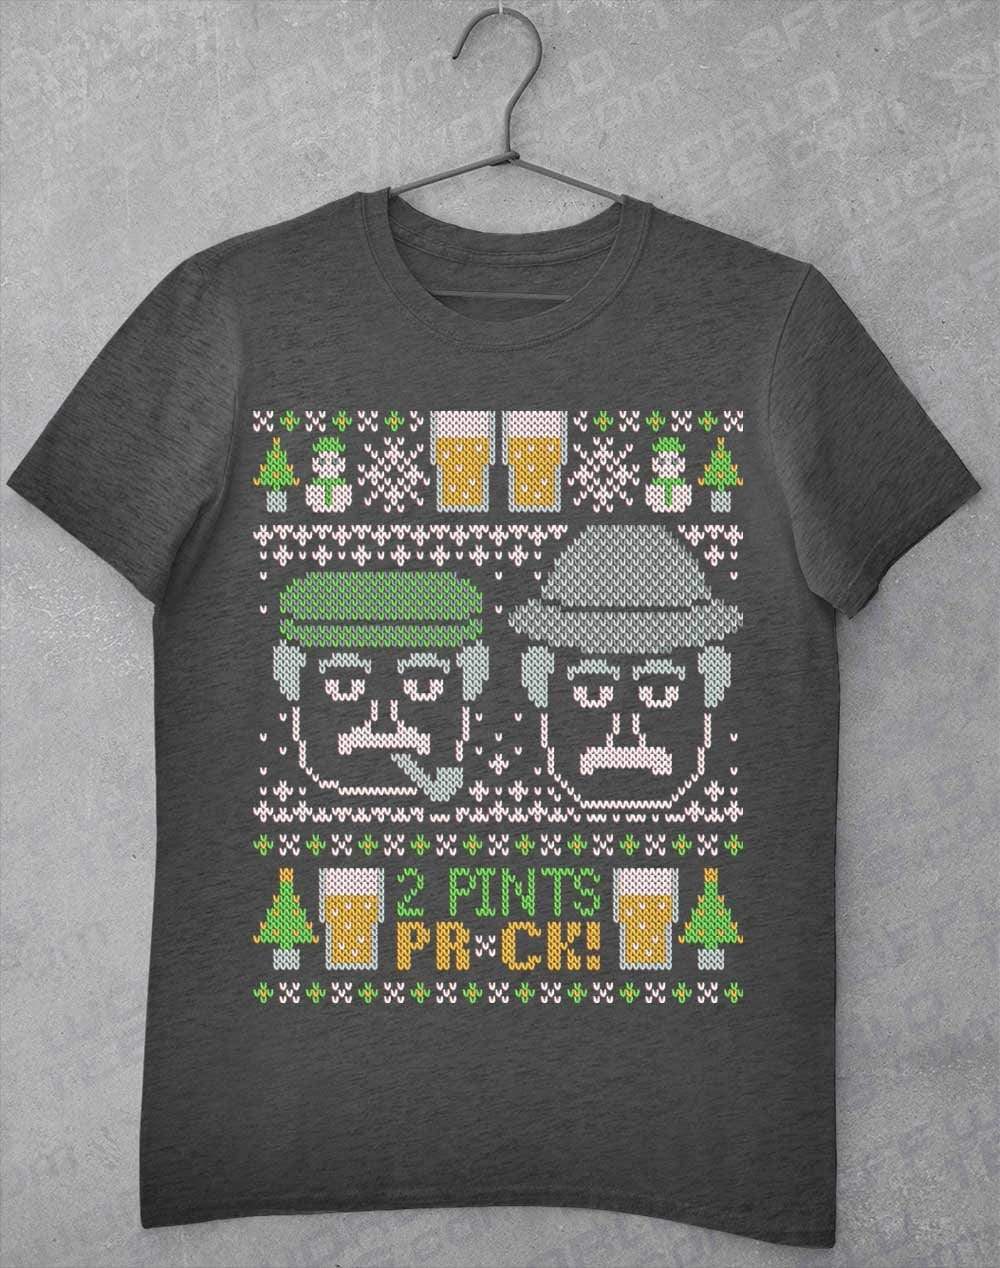 Craiglang Christmas 2 Pints Knit Pattern T-Shirt S / Dark Heather  - Off World Tees